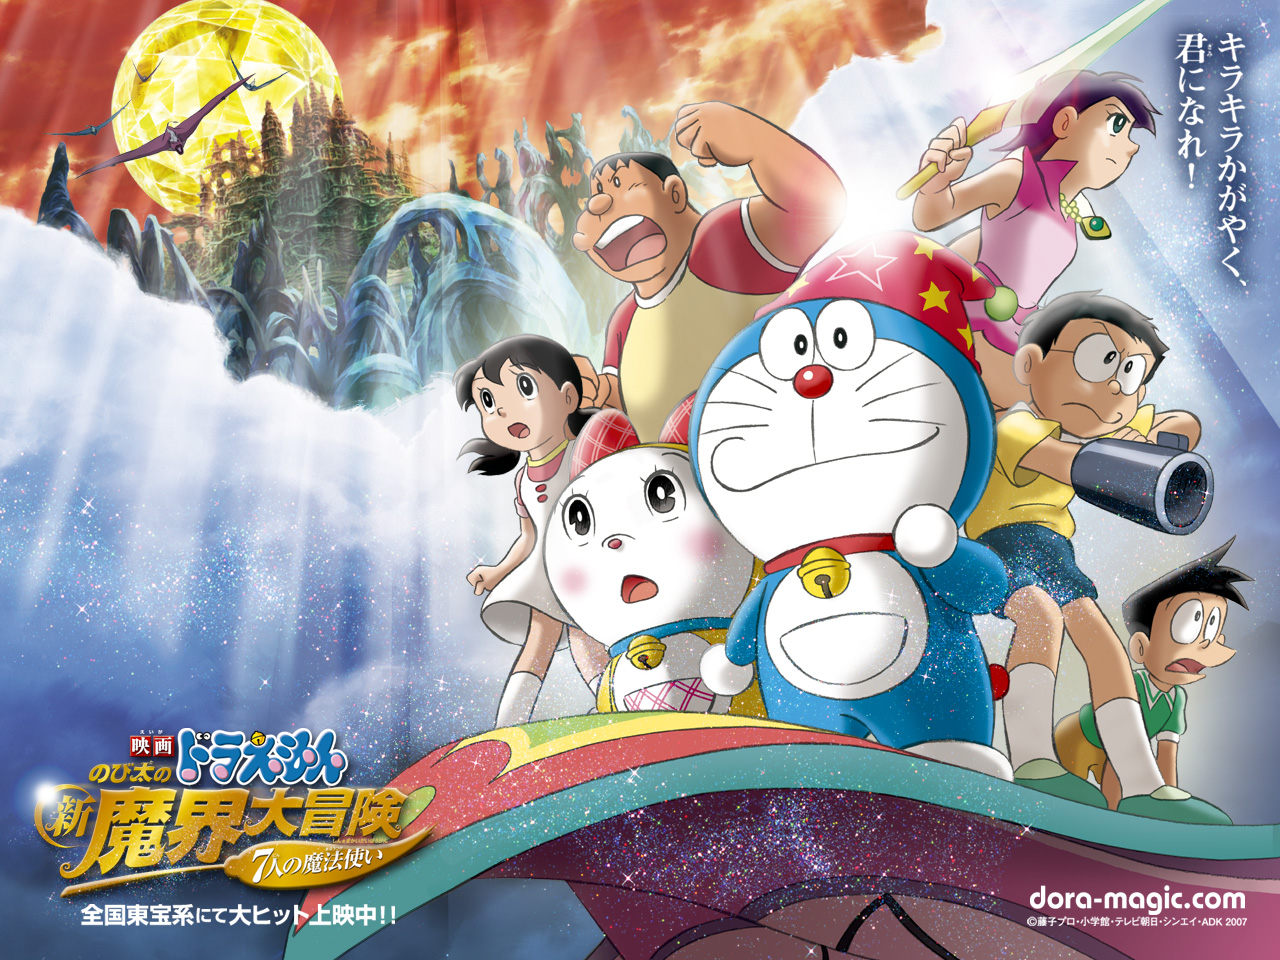 HQ Doraemon Background Images